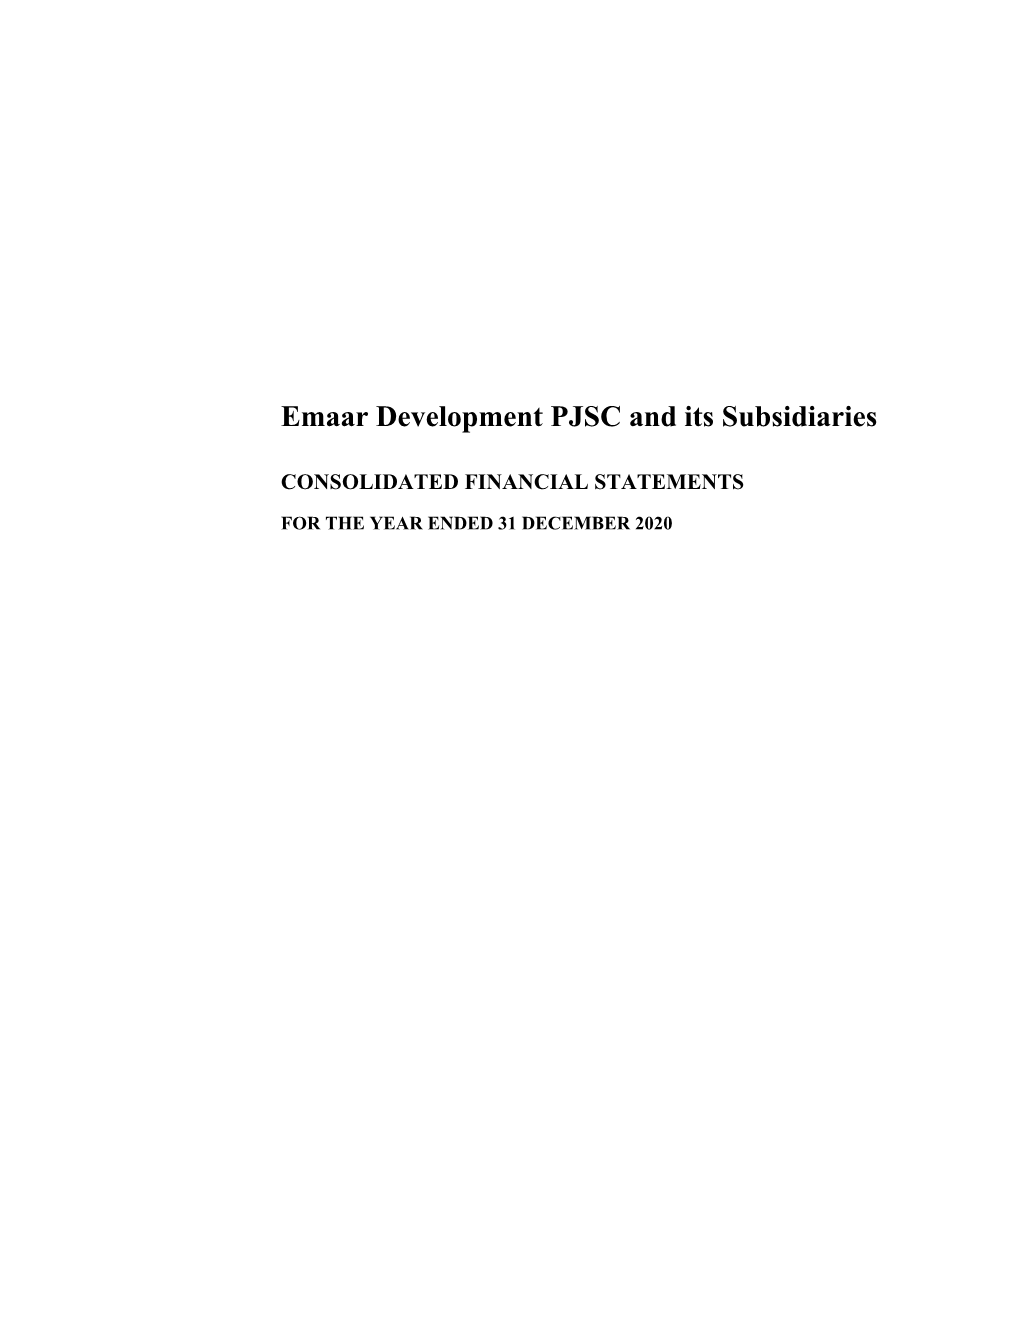 Emaar Development PJSC and Its Subsidiaries